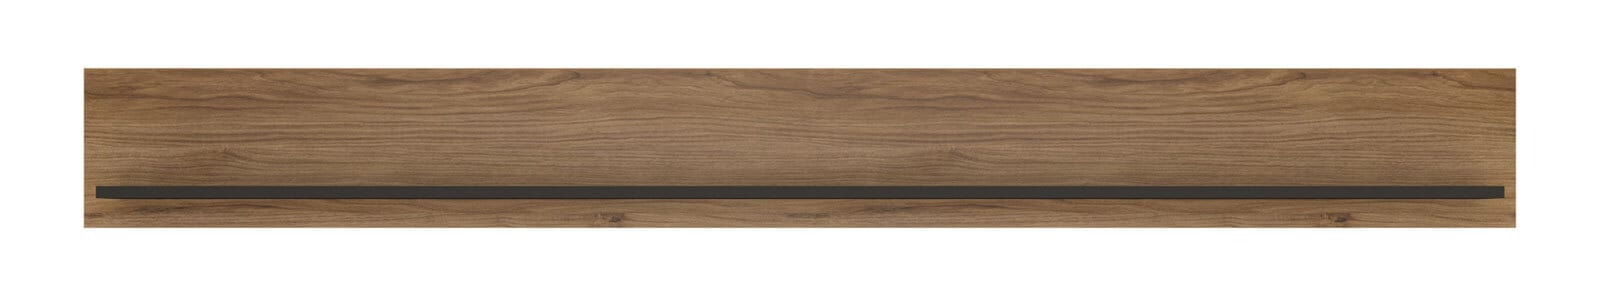 Wandboard BROLO 197,3 x 22 cm braun/ schwarz